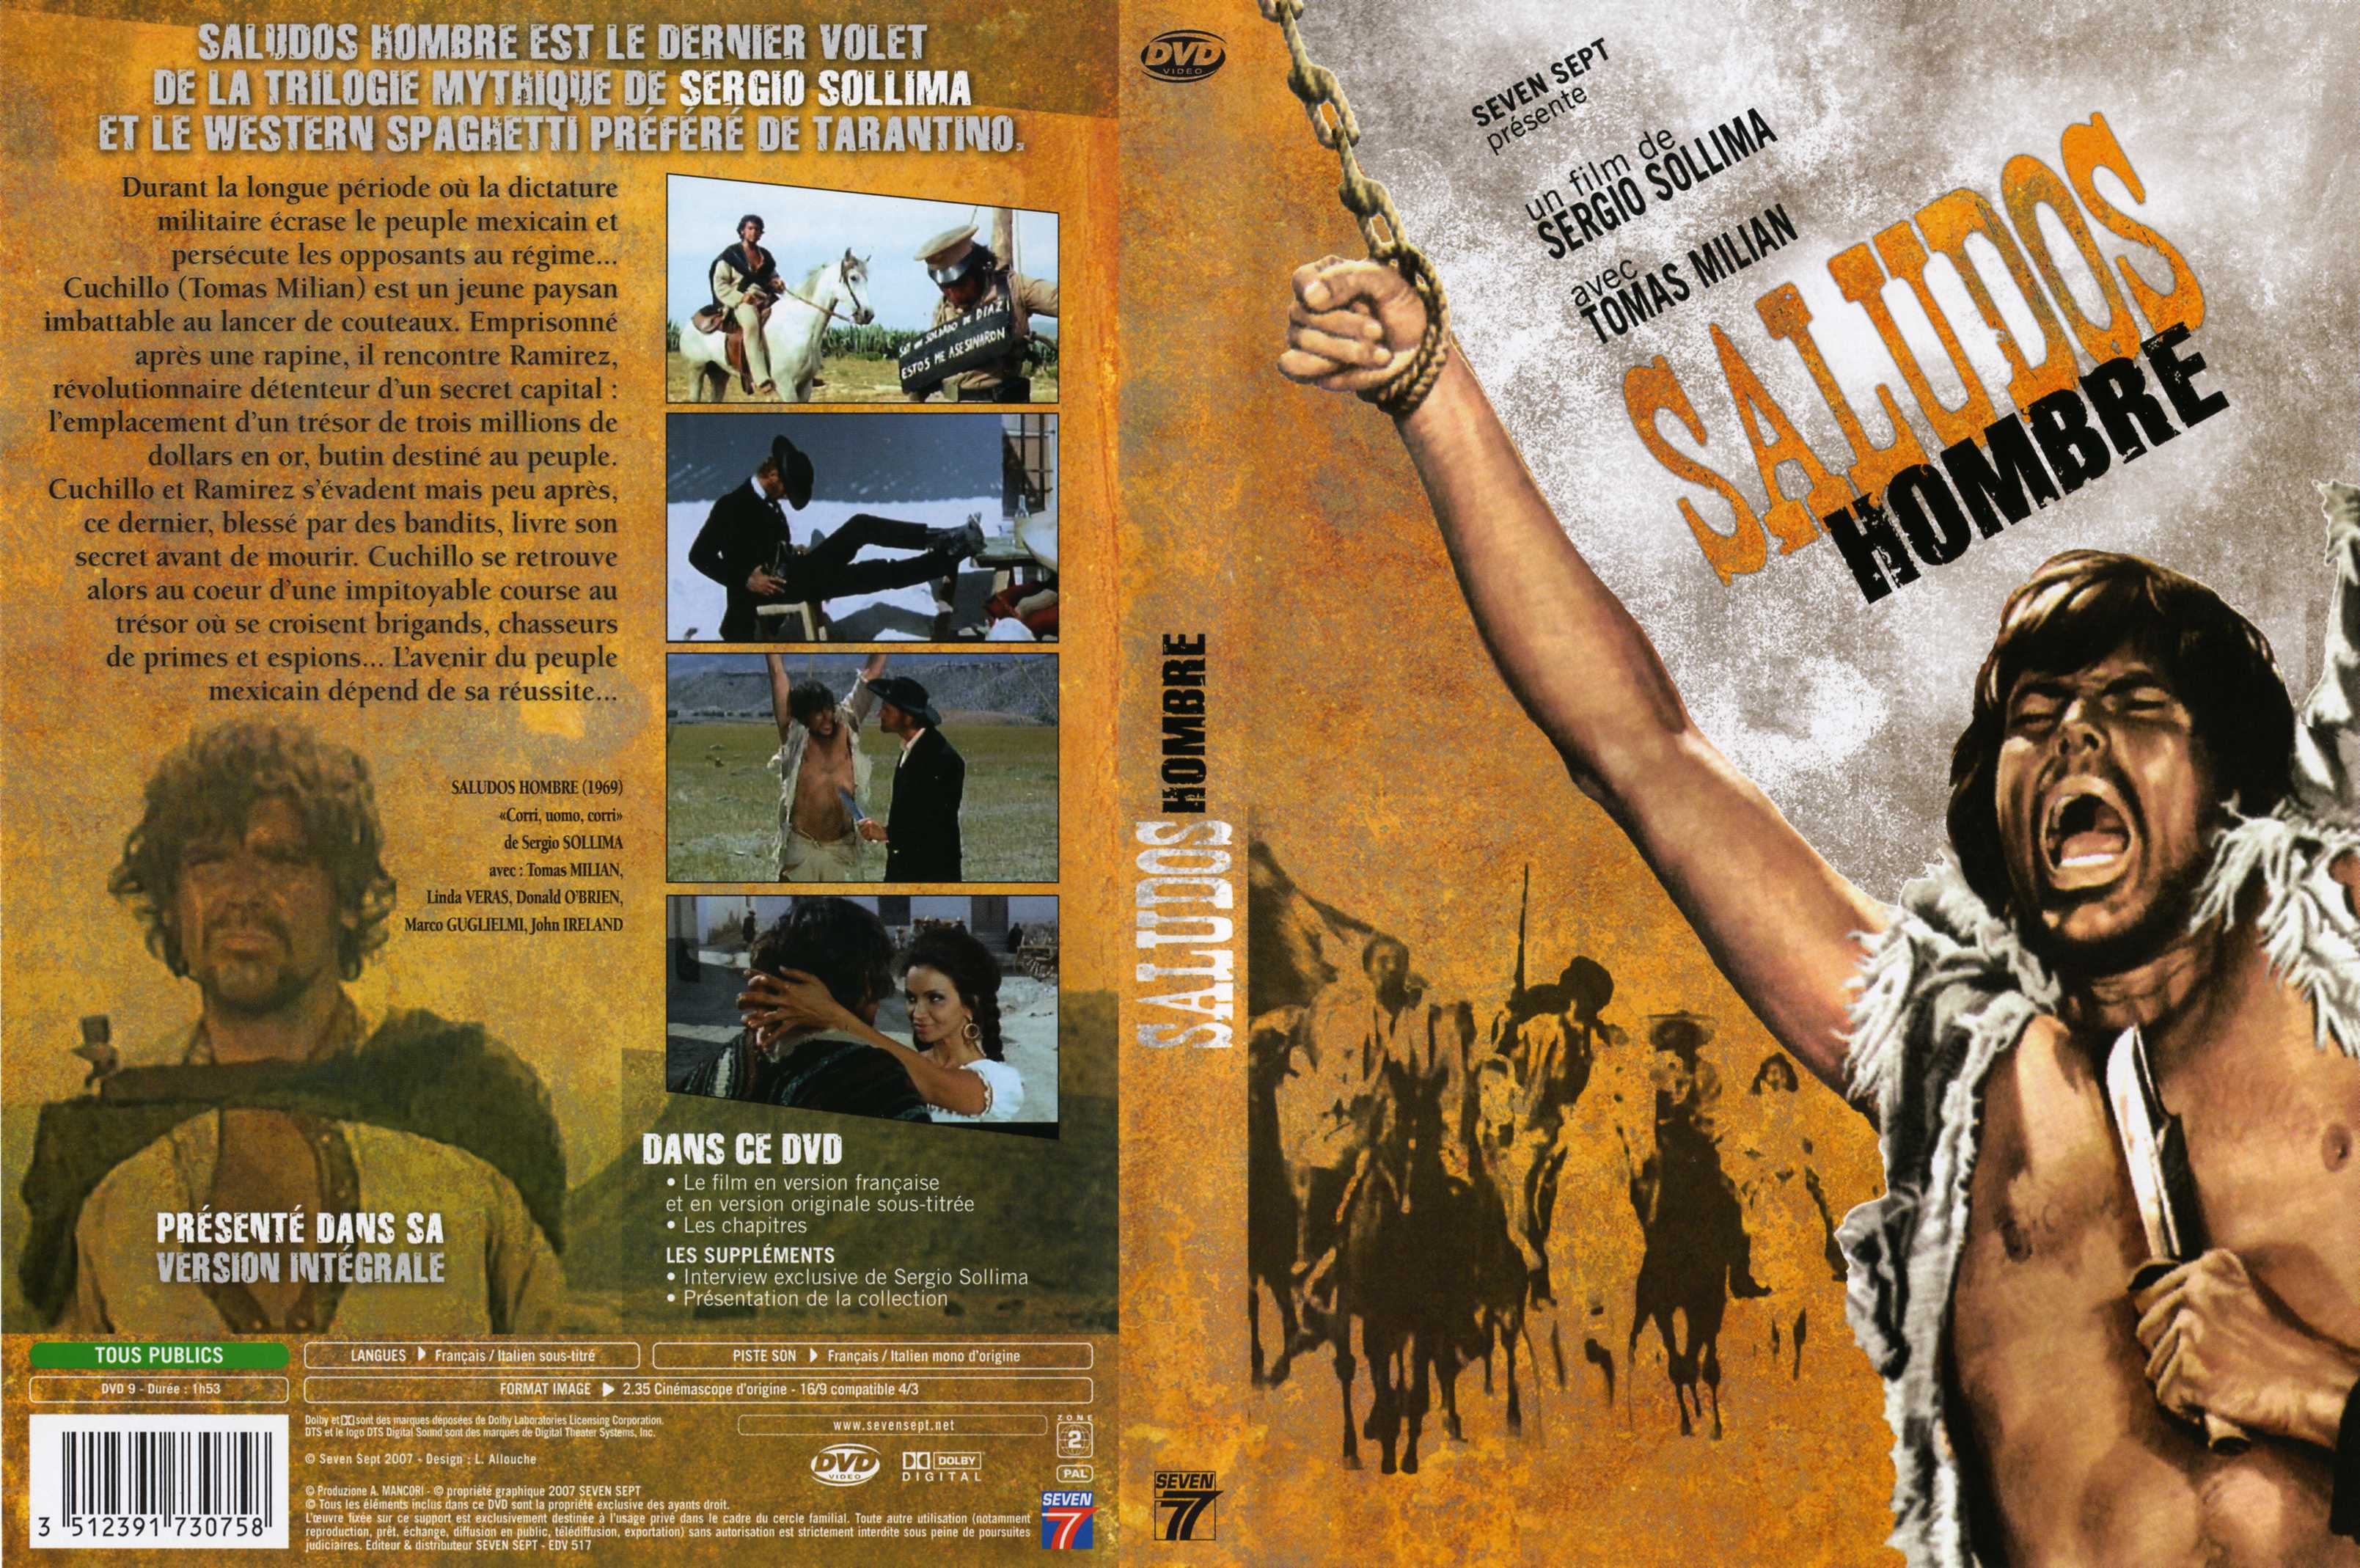 Jaquette DVD Saludos hombre